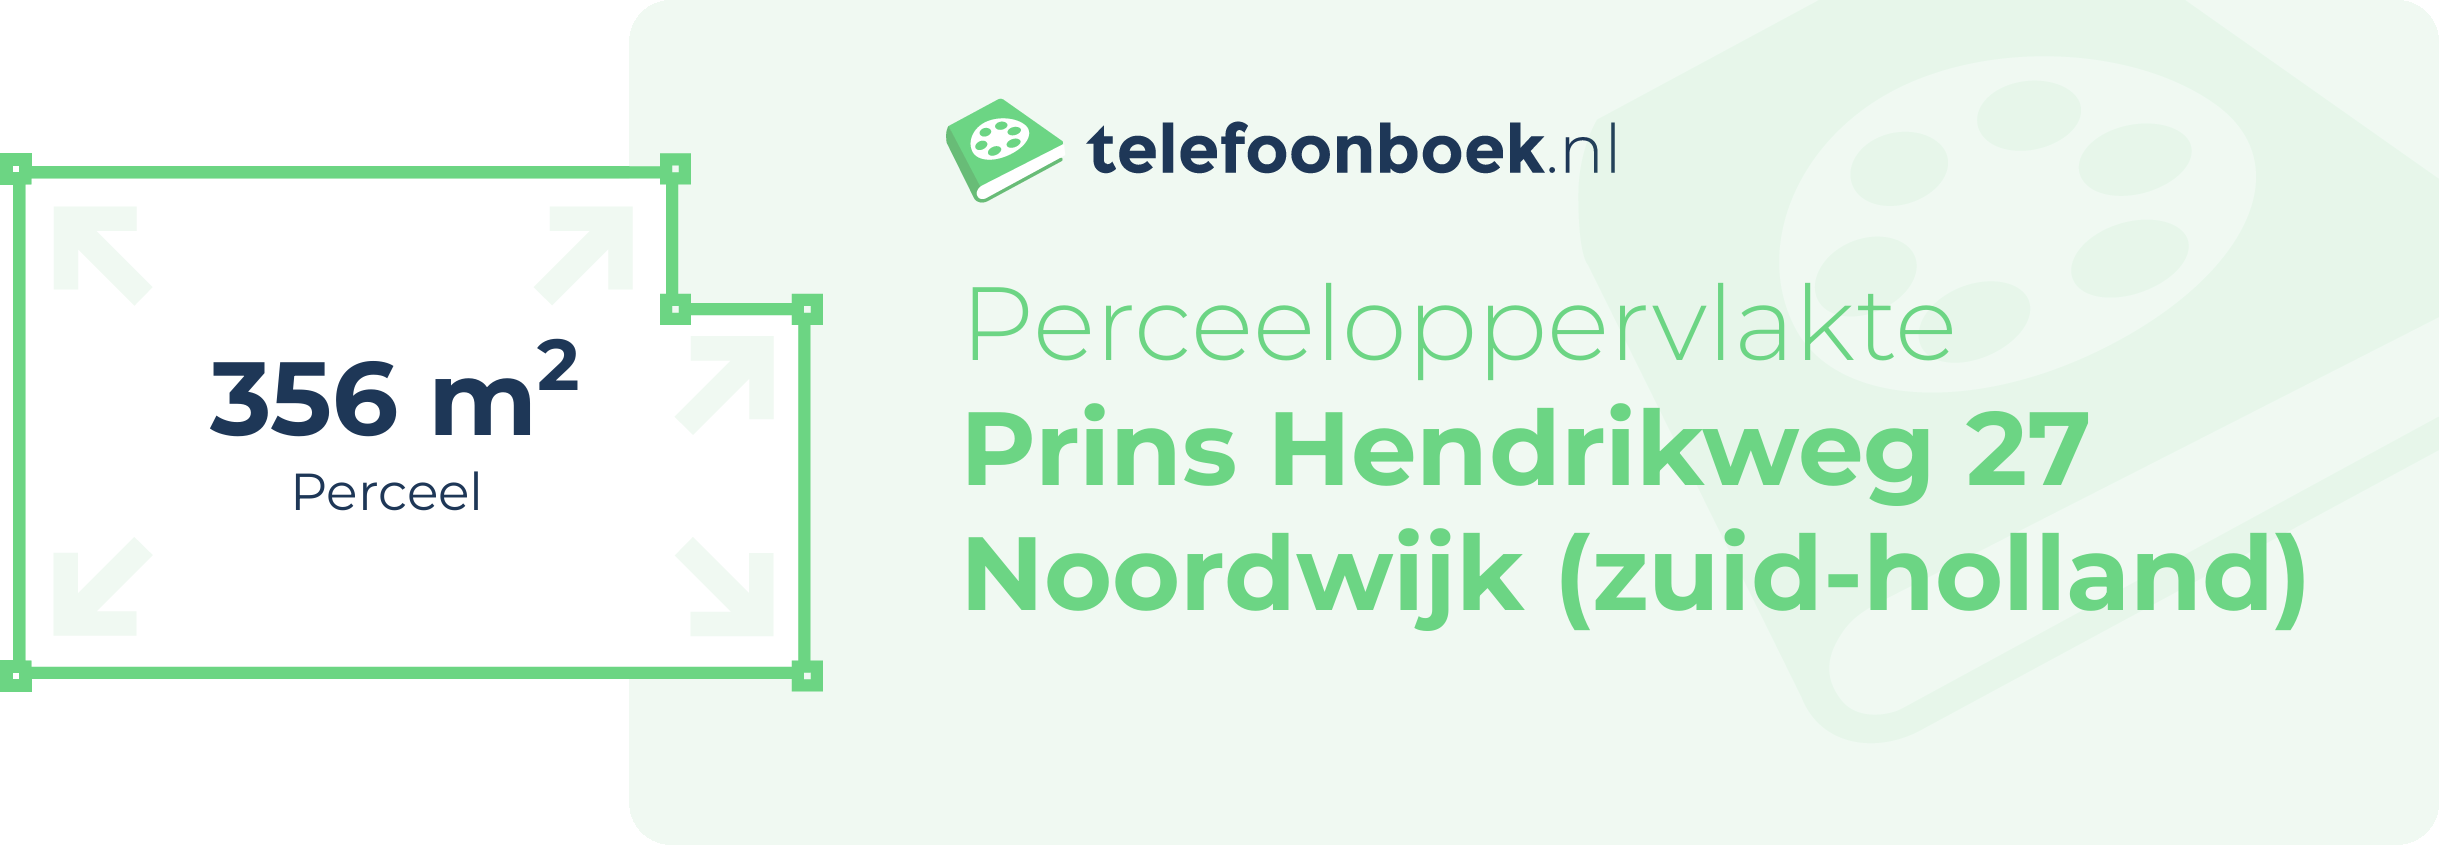 Perceeloppervlakte Prins Hendrikweg 27 Noordwijk (Zuid-Holland)